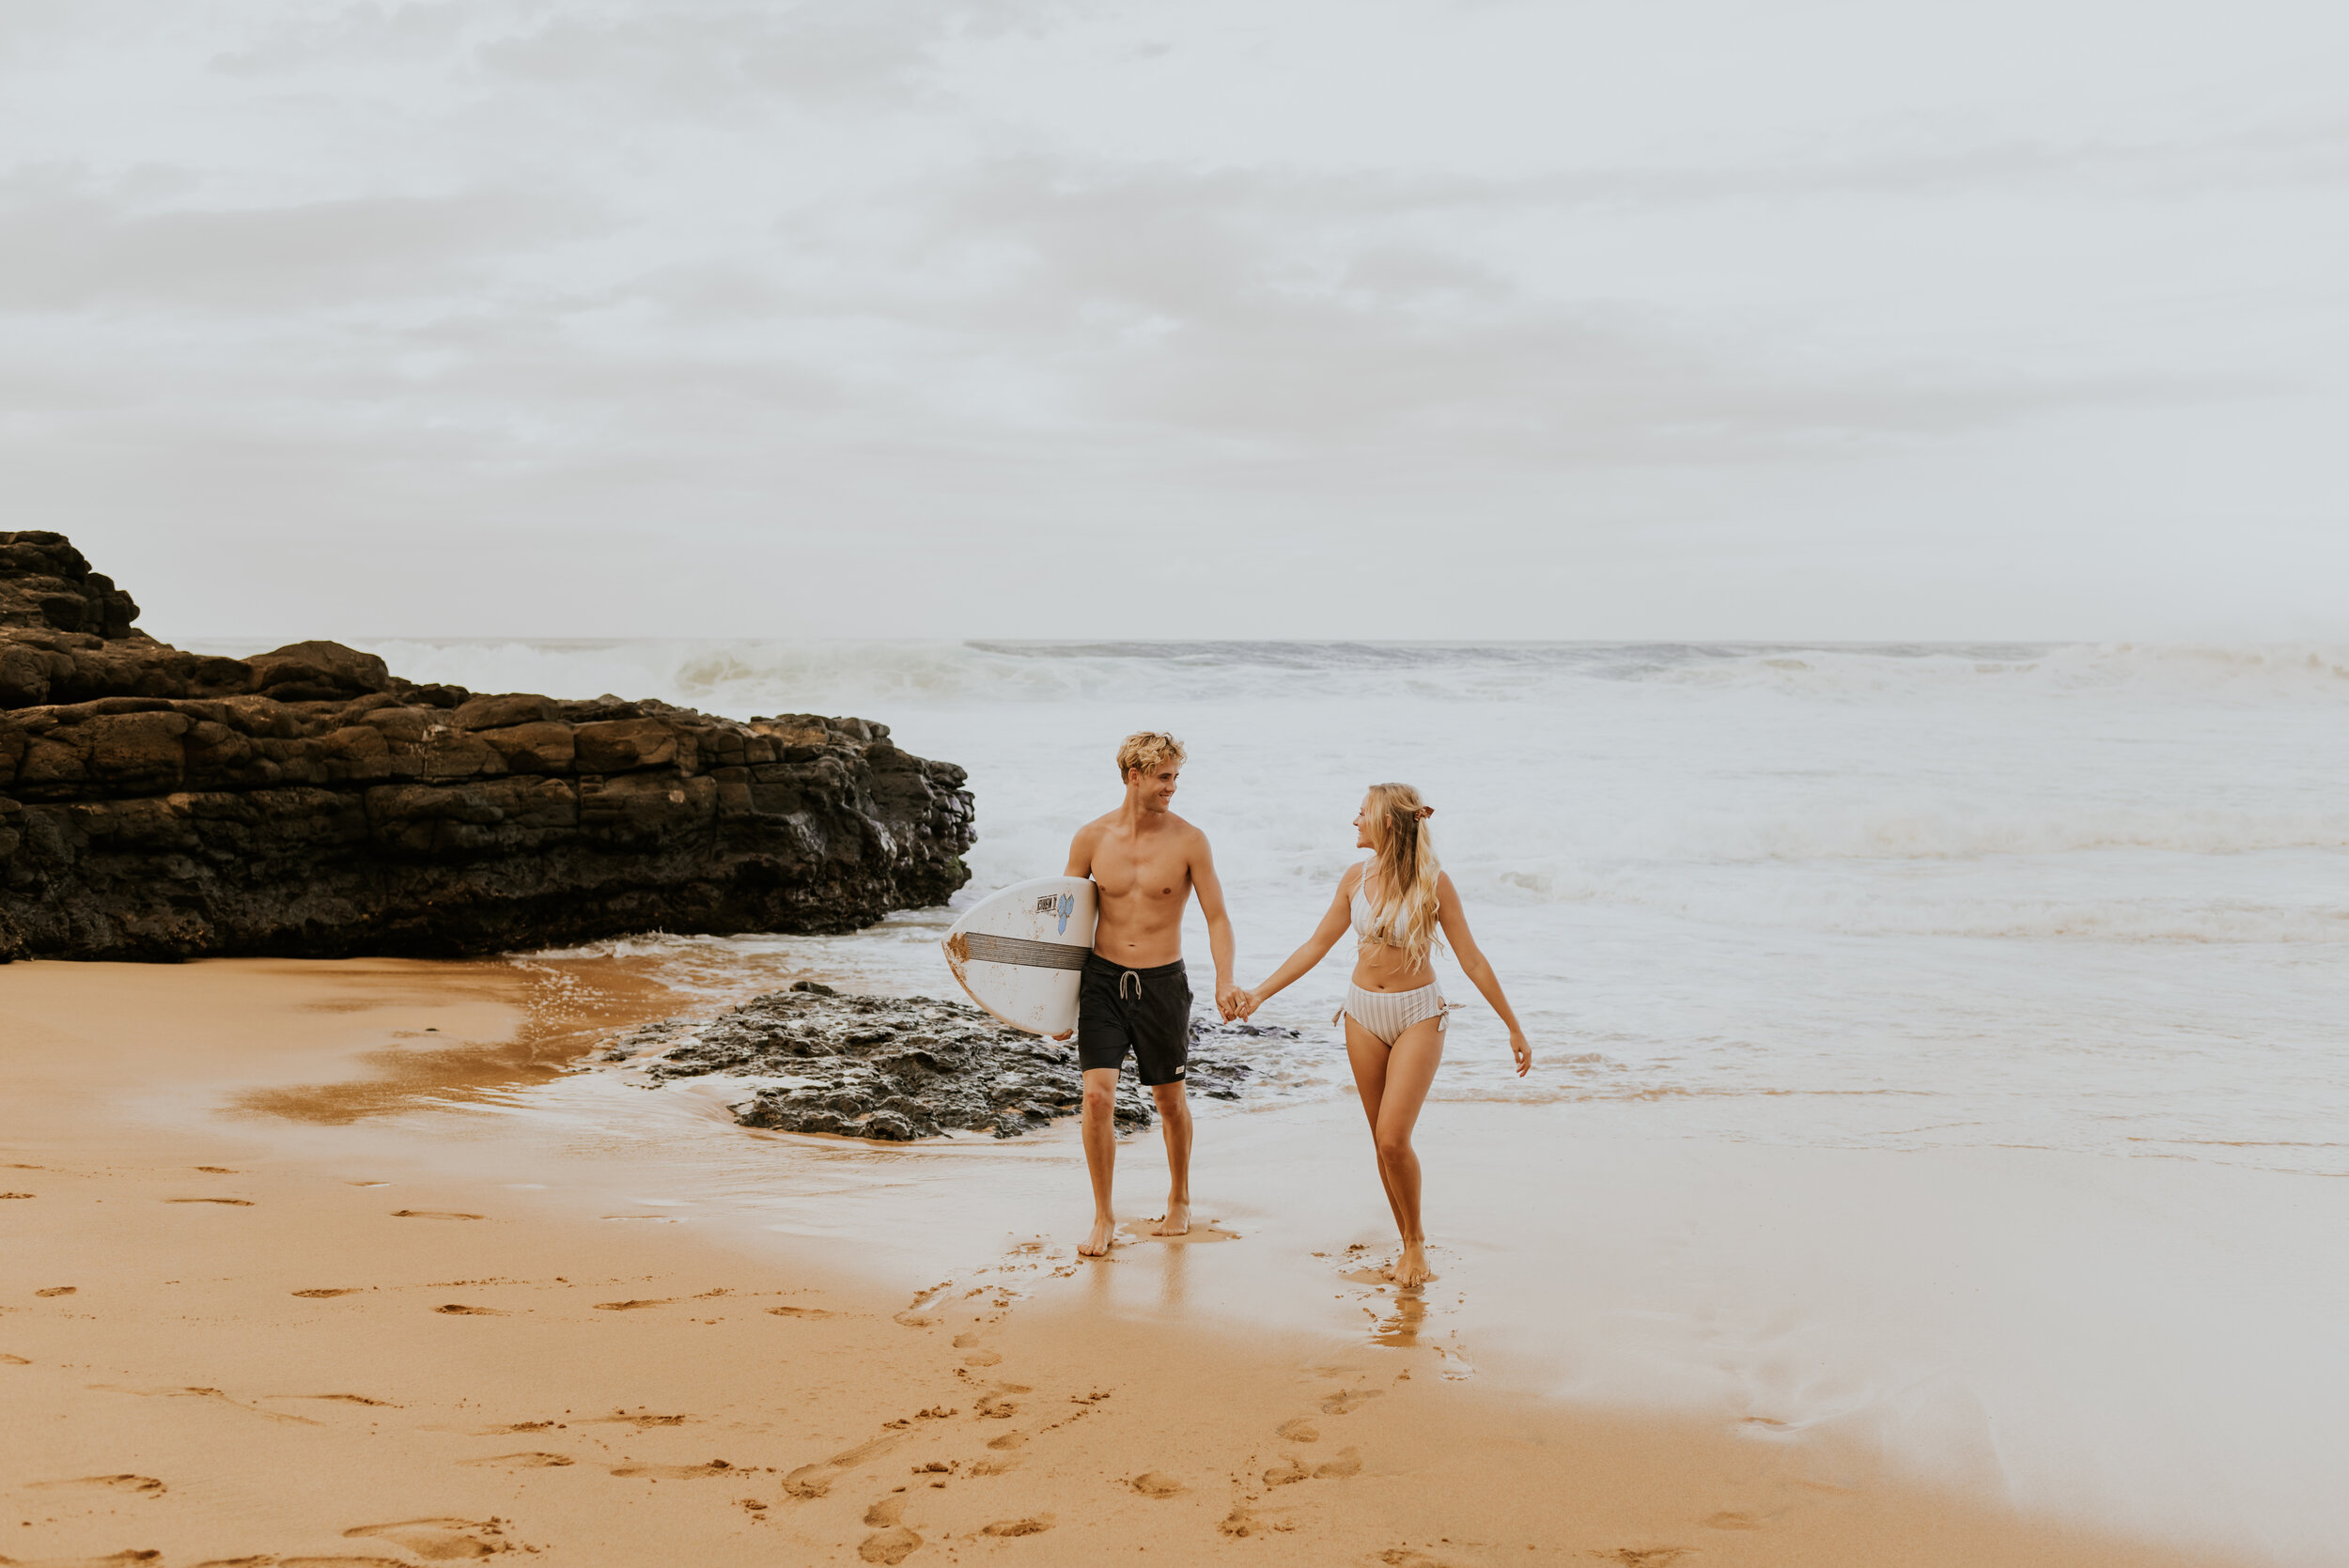  Kauai Beach Engagement Session | Secret Beach Kauai | Hawaii Couple Photos | Kauai Elopement Photographer | Hawaii Engagement | Destination Wedding Photographer  | Surfboard Engagement Session